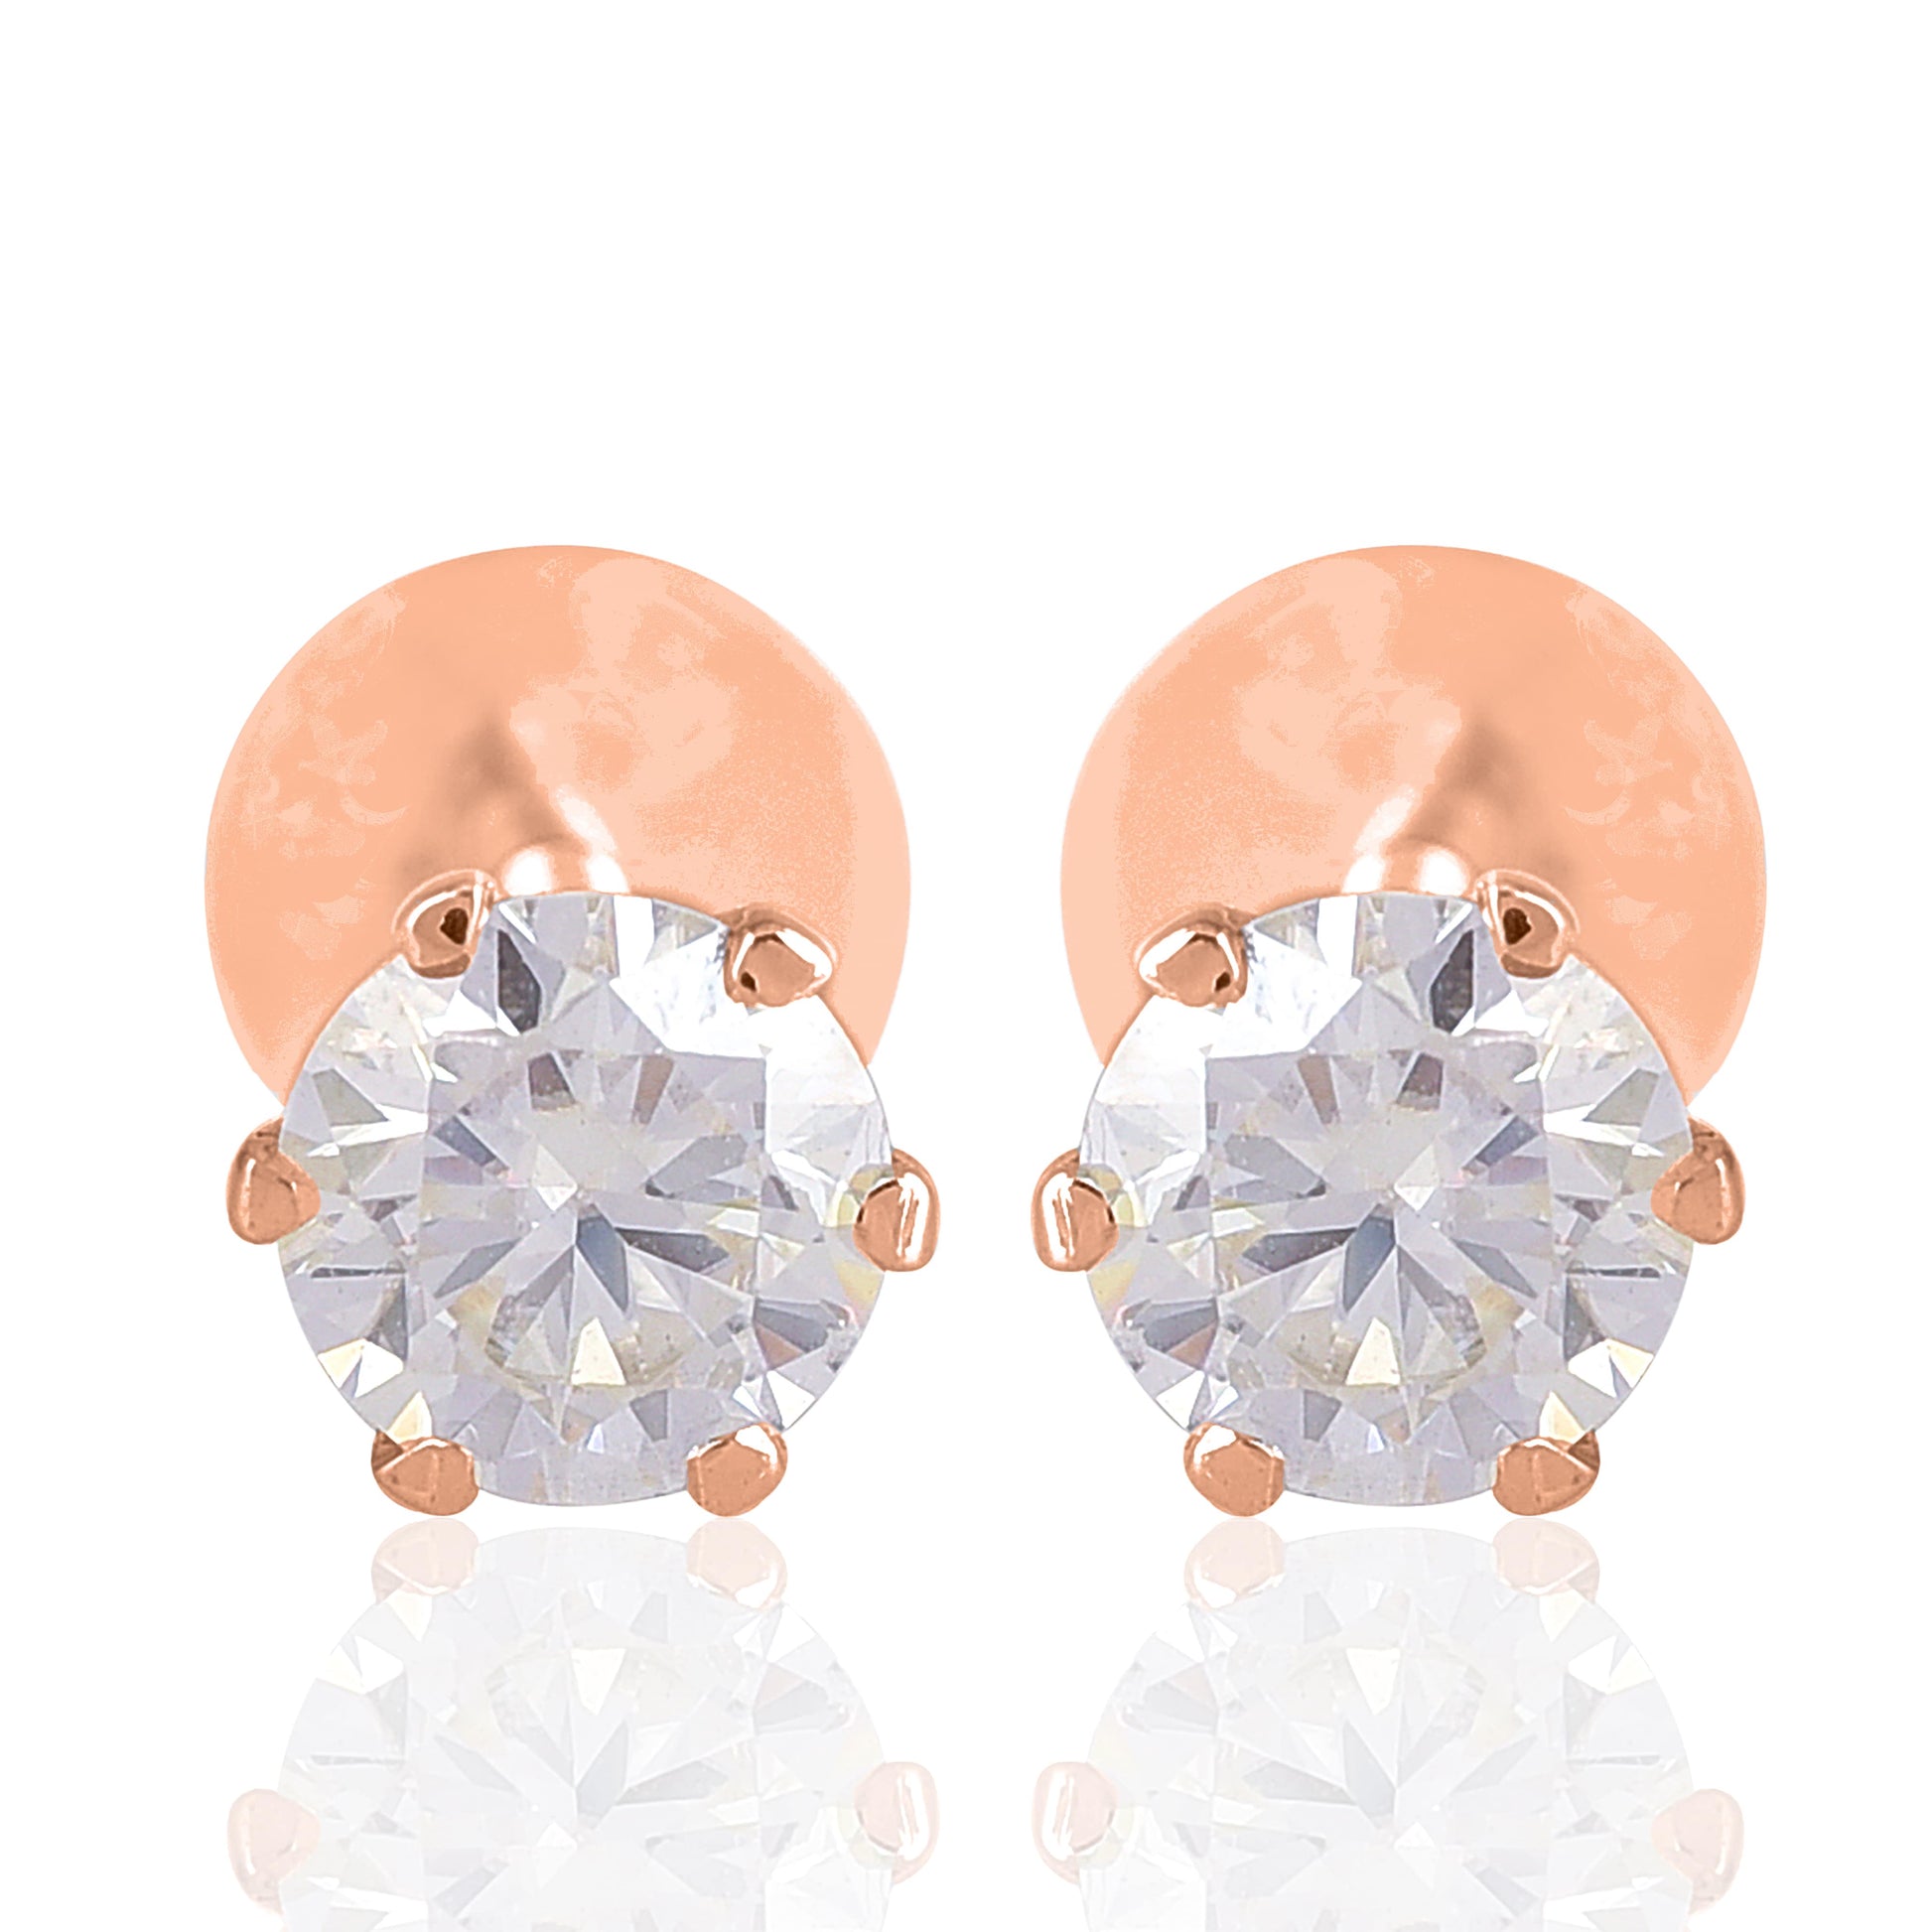 Stud Earrings in Rose Gold